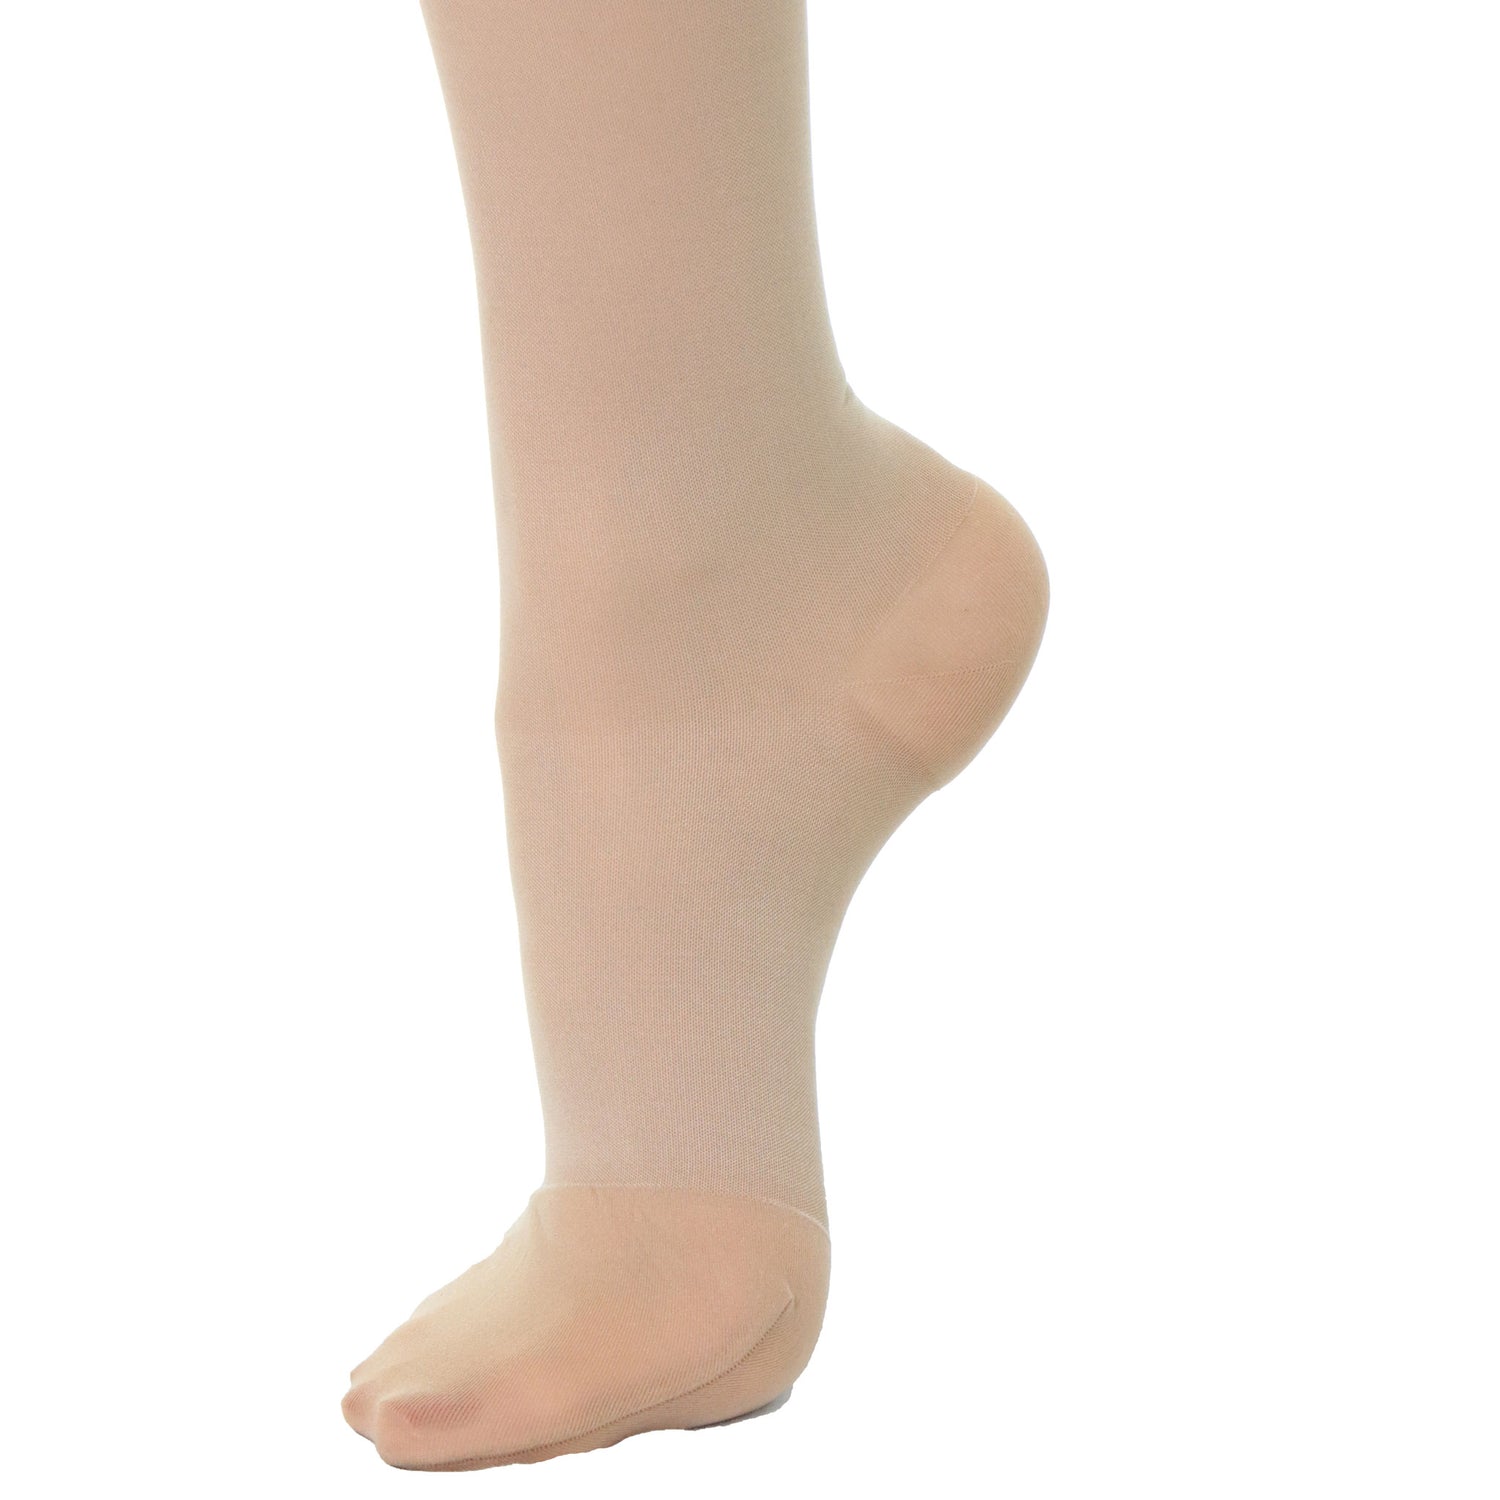 Compression Socks For Women  Knee High - 20 30 mmHg - Closed Toe